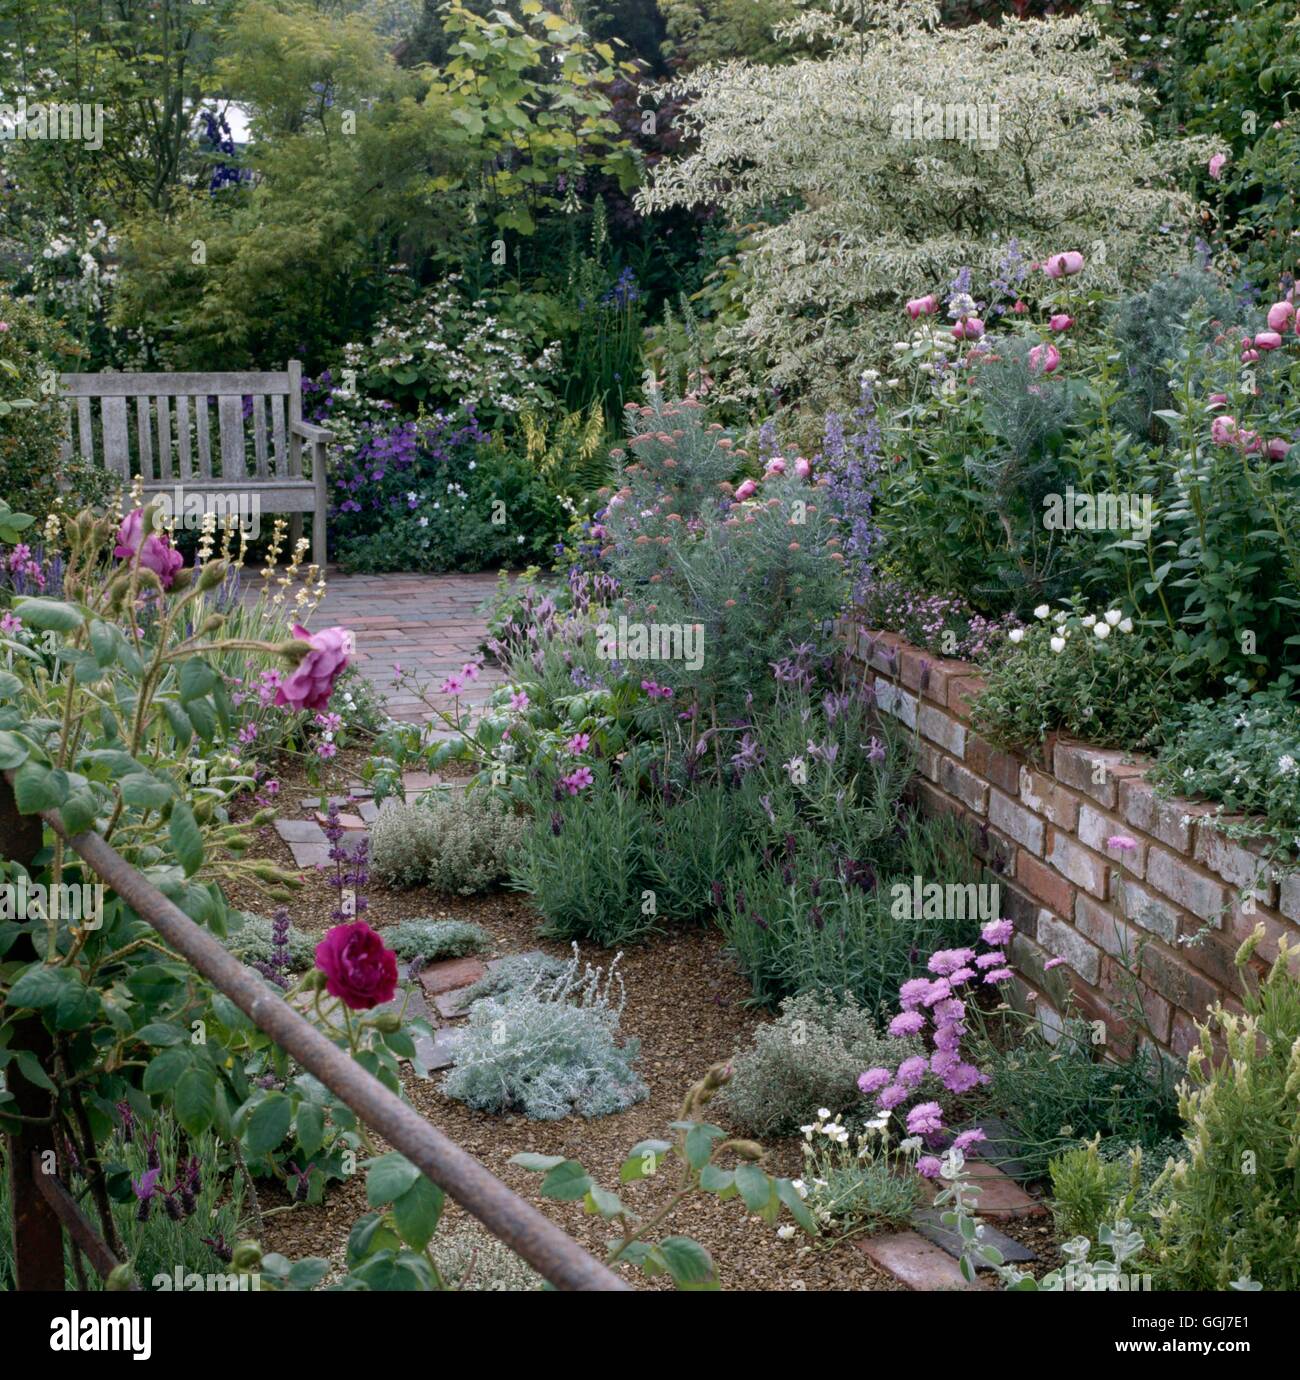 Cottage Garden - (Please credit: Photos Horticultural/designer Roger Platts) - (Chelsea FS 97)   COT073370  Compulsory Stock Photo